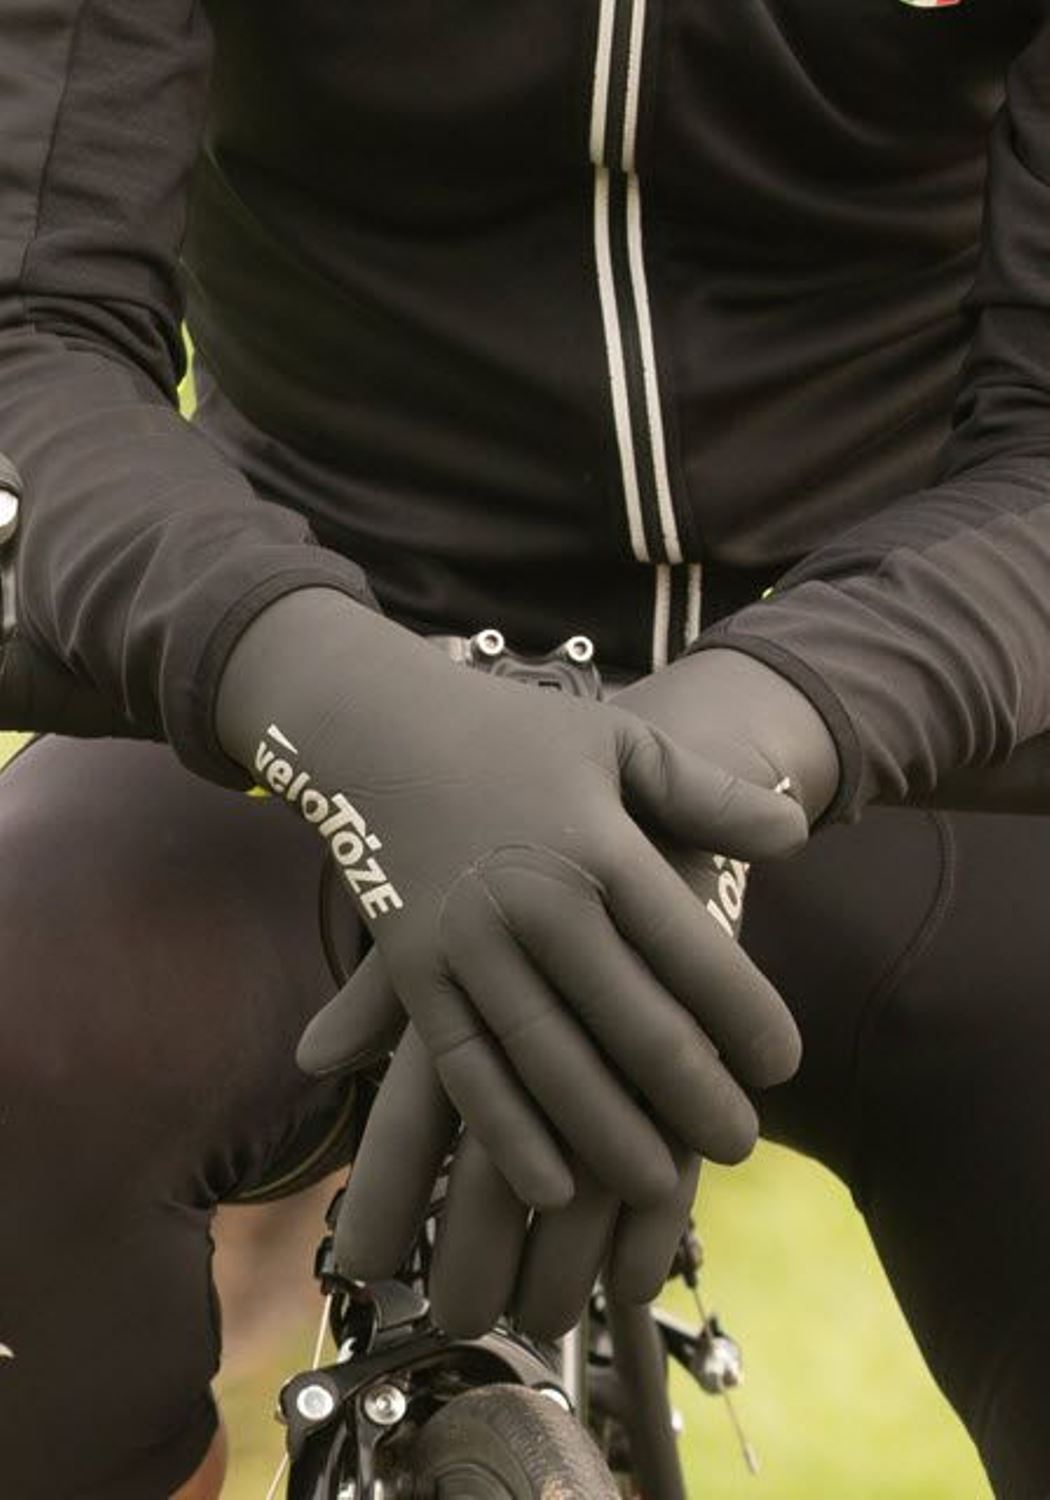 Neoprene Waterproof Gloves